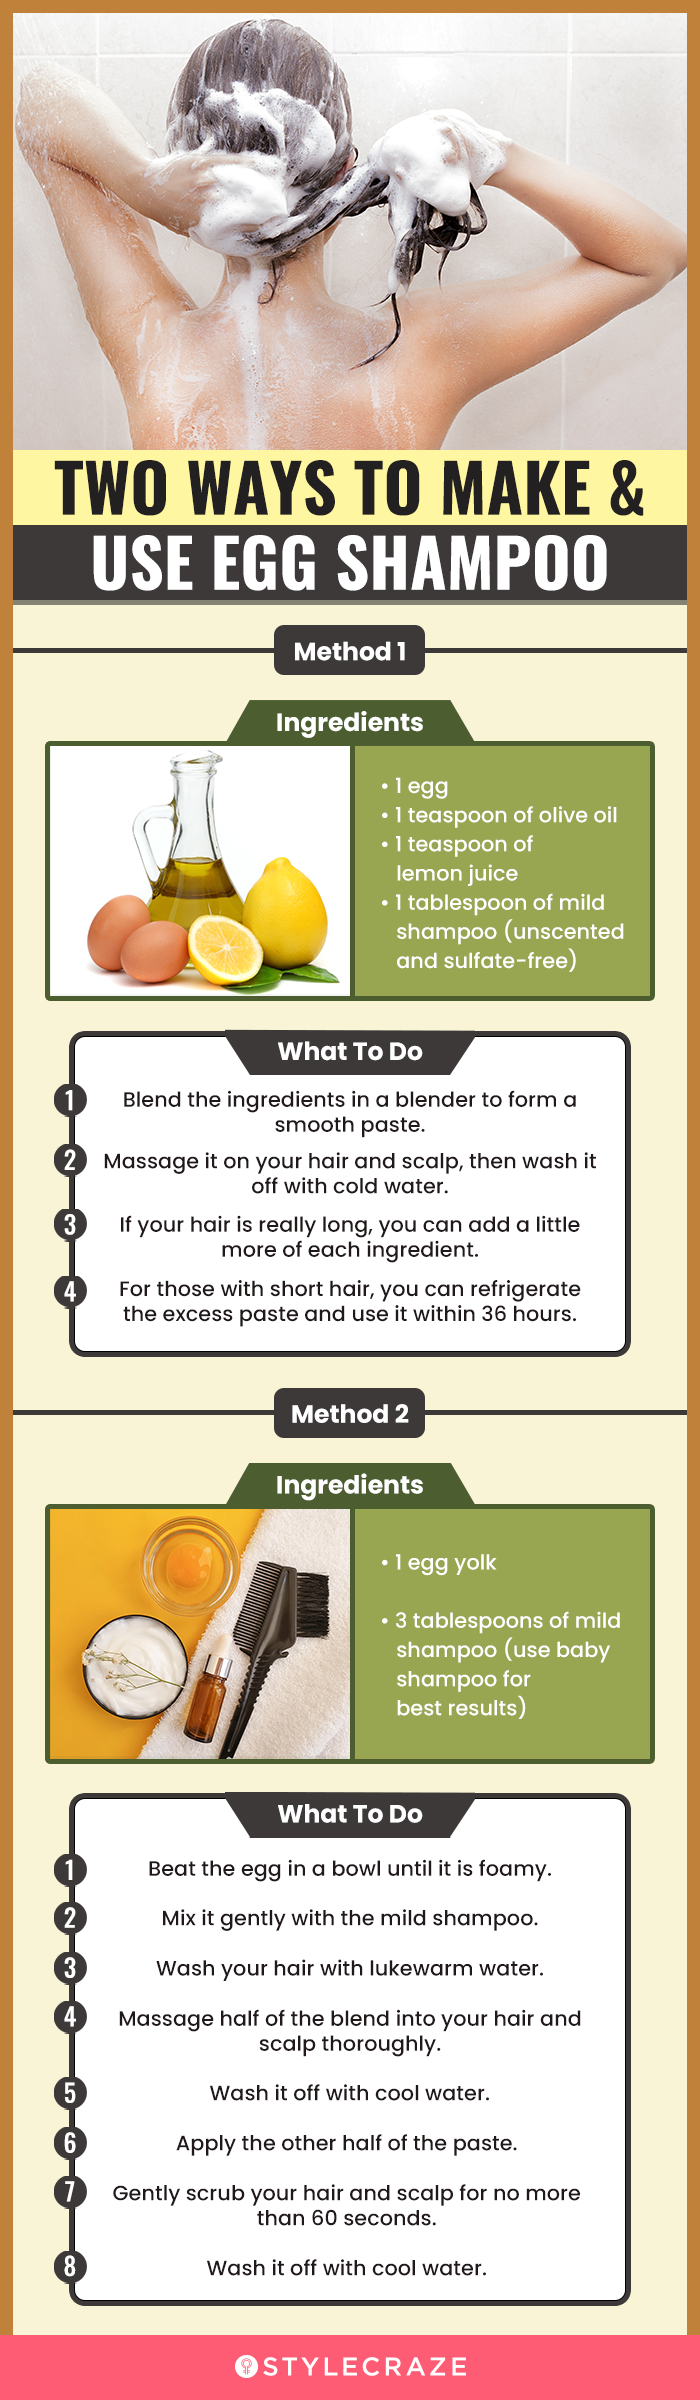 two ways to make & use egg shampoo(infographic)